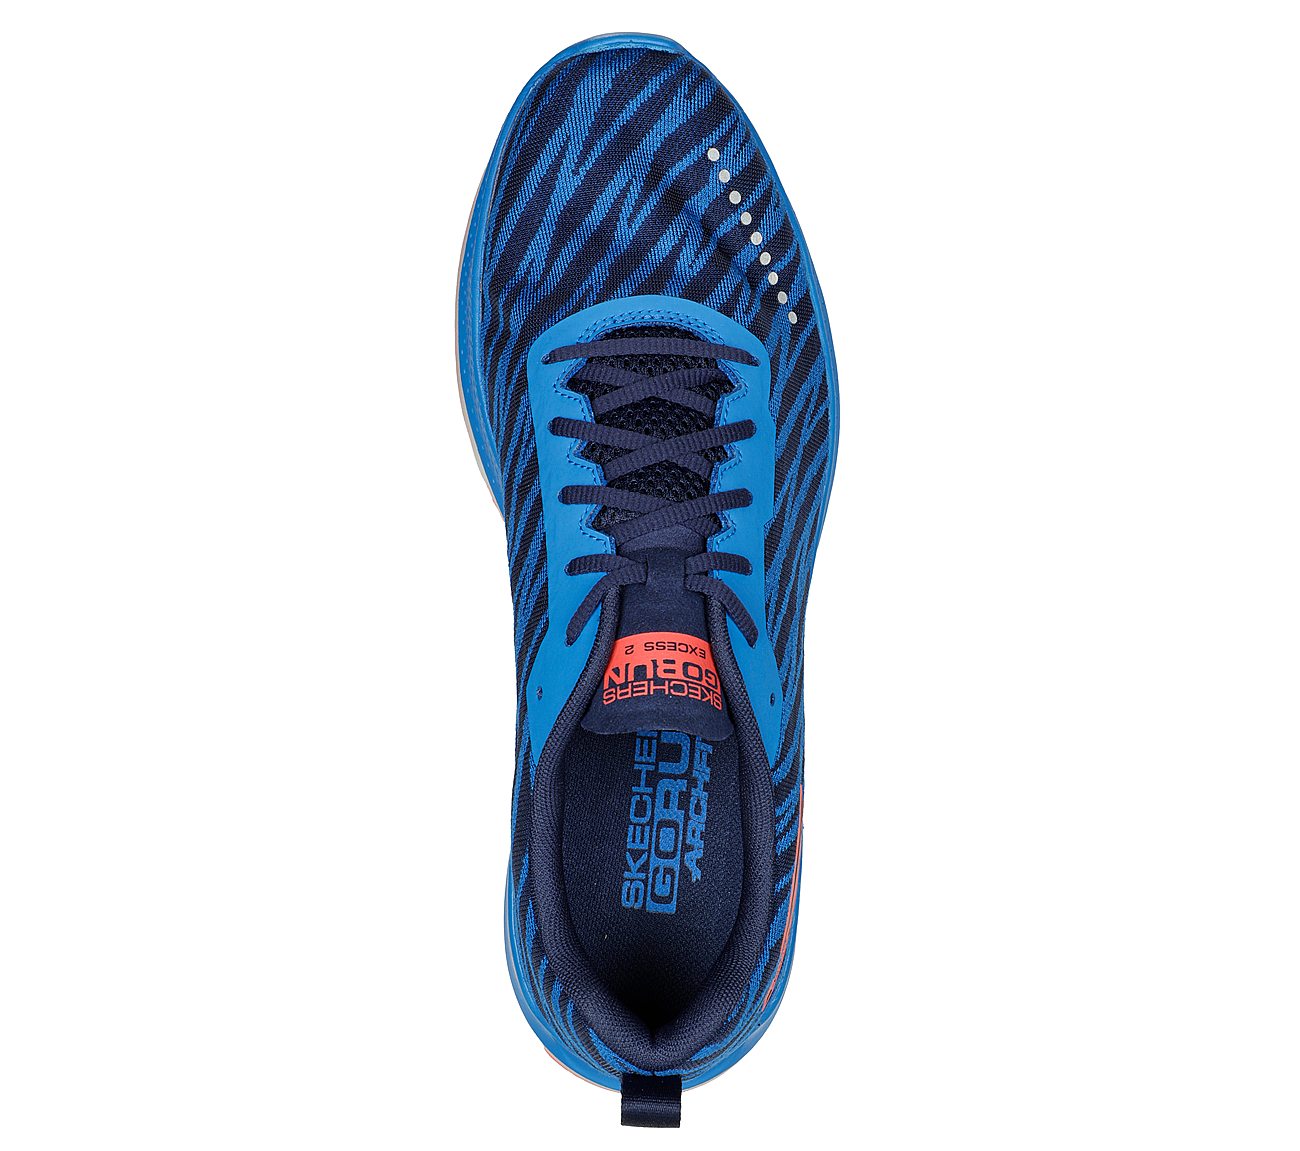 GO RUN RAZOR EXCESS 2, BLUE/NAVY Footwear Top View